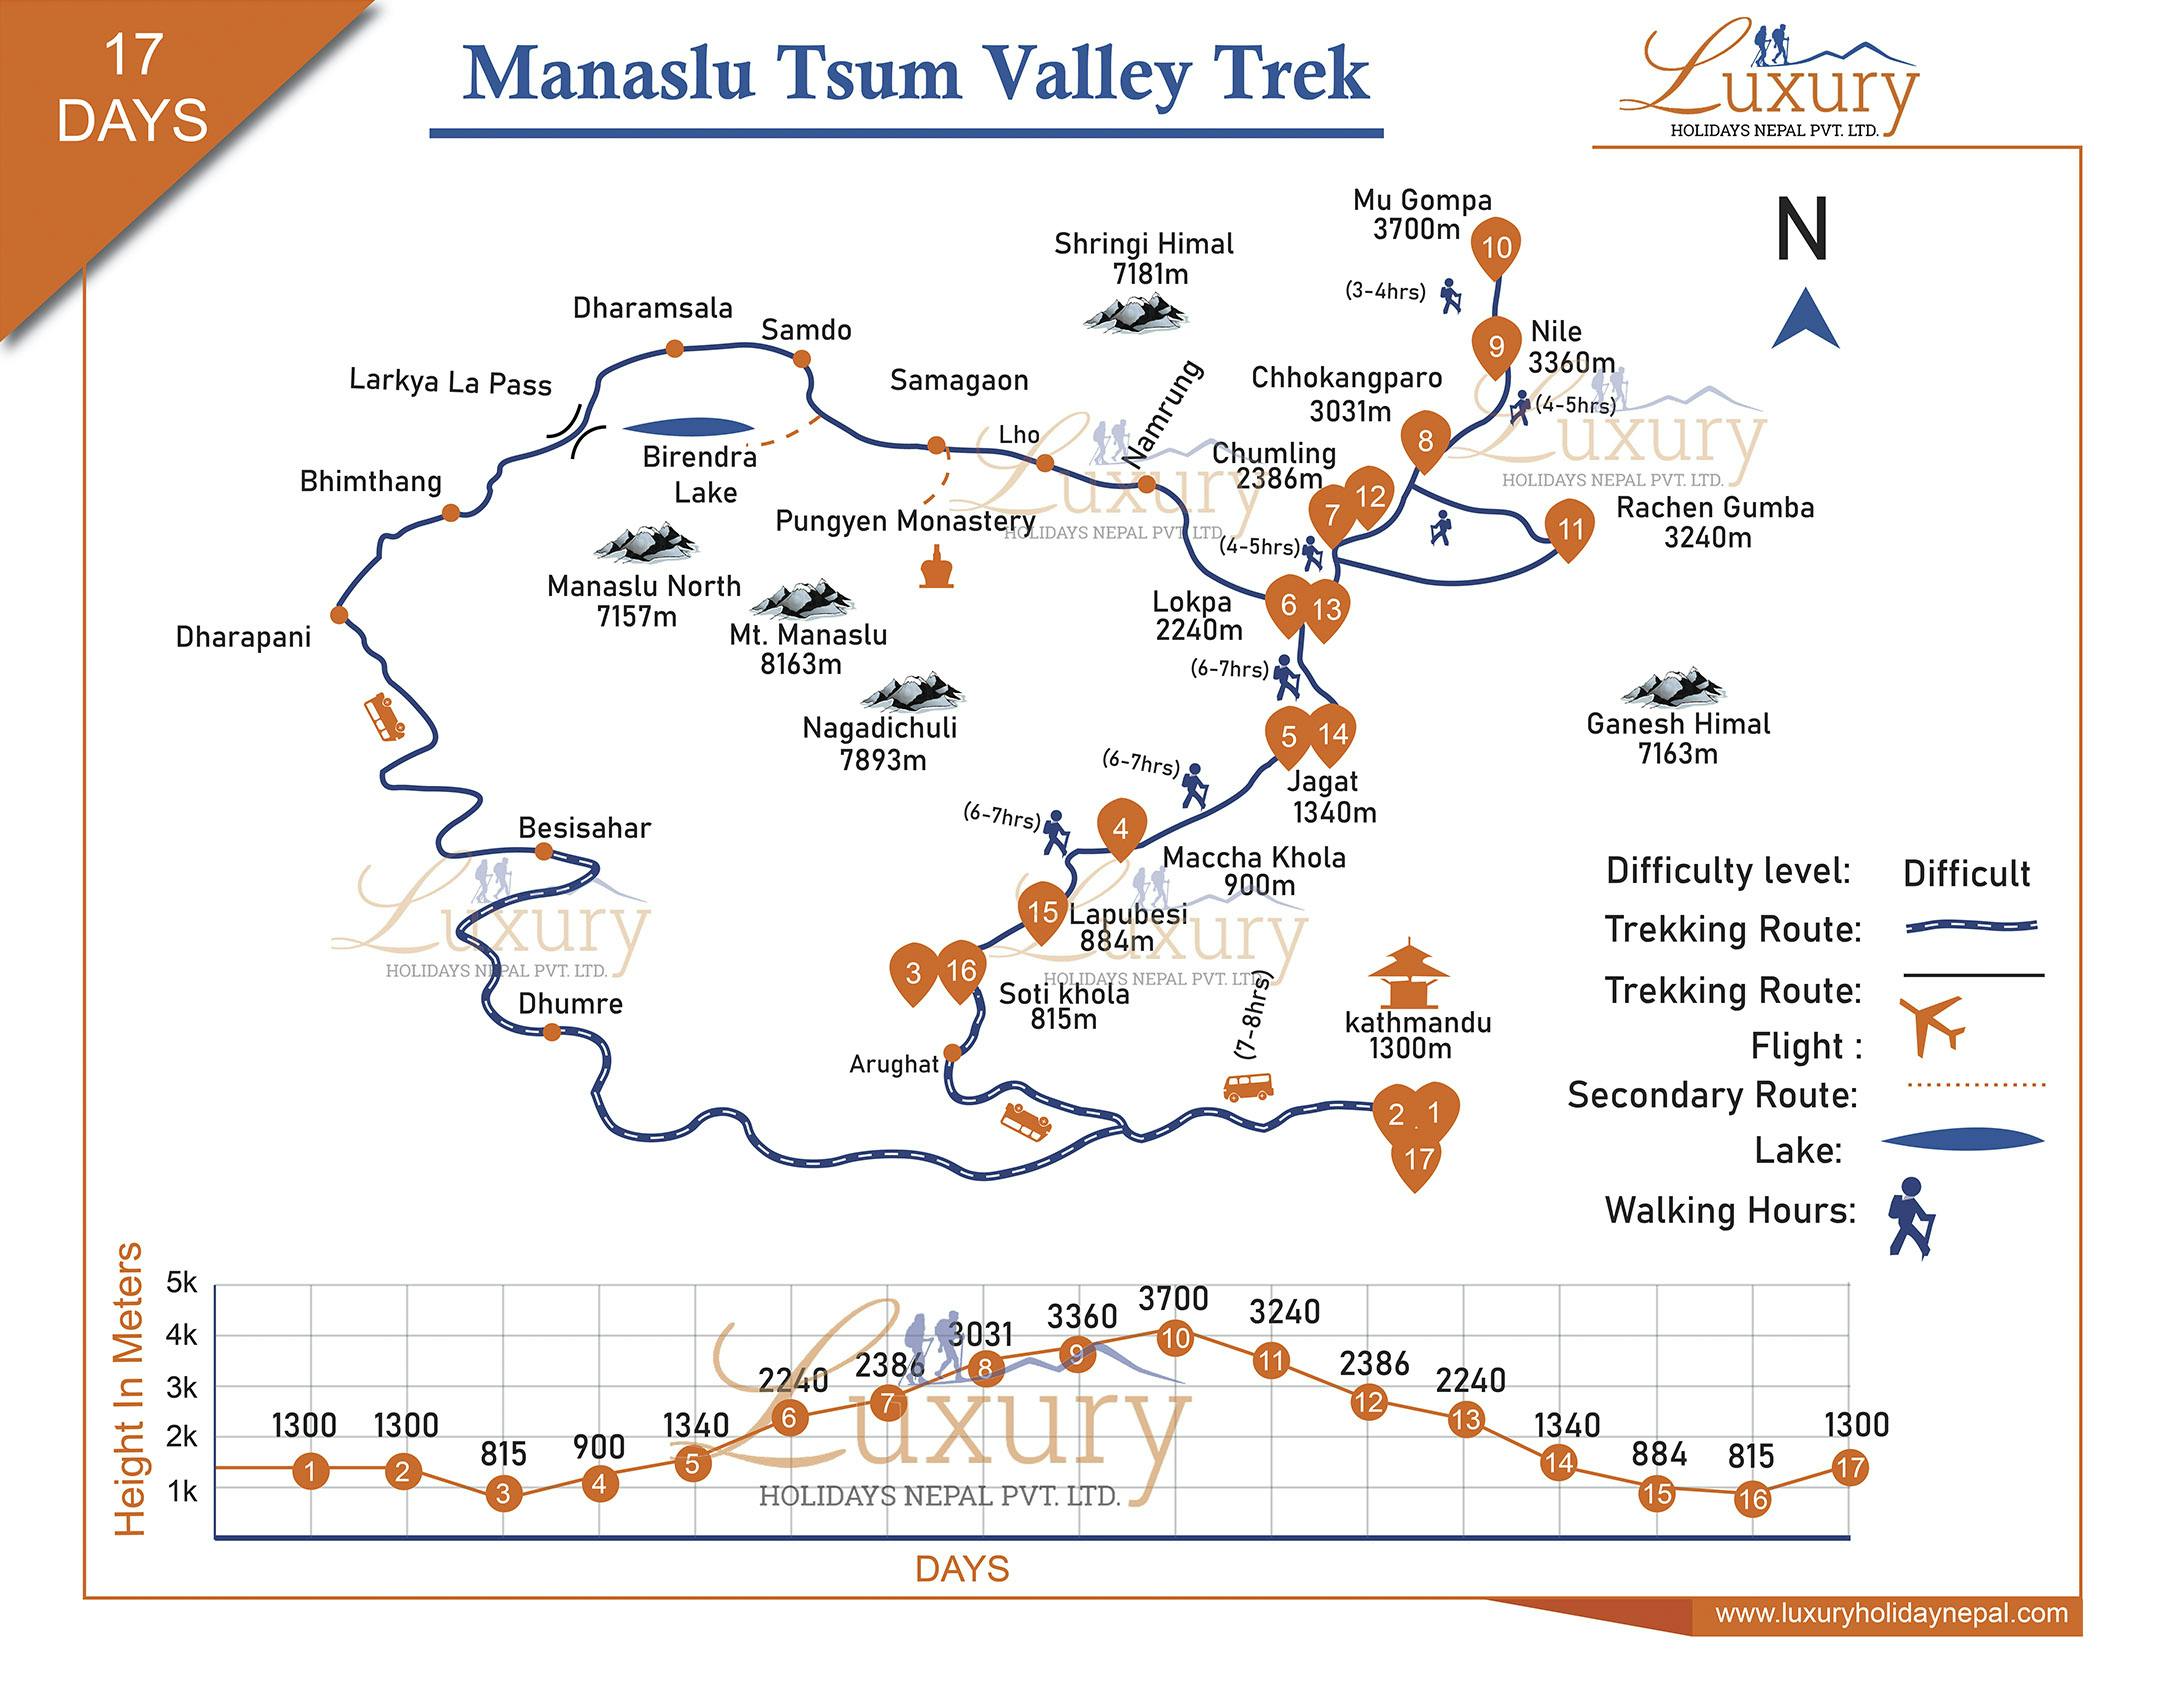 Tsum Valley Manaslu Circuit TrekMap